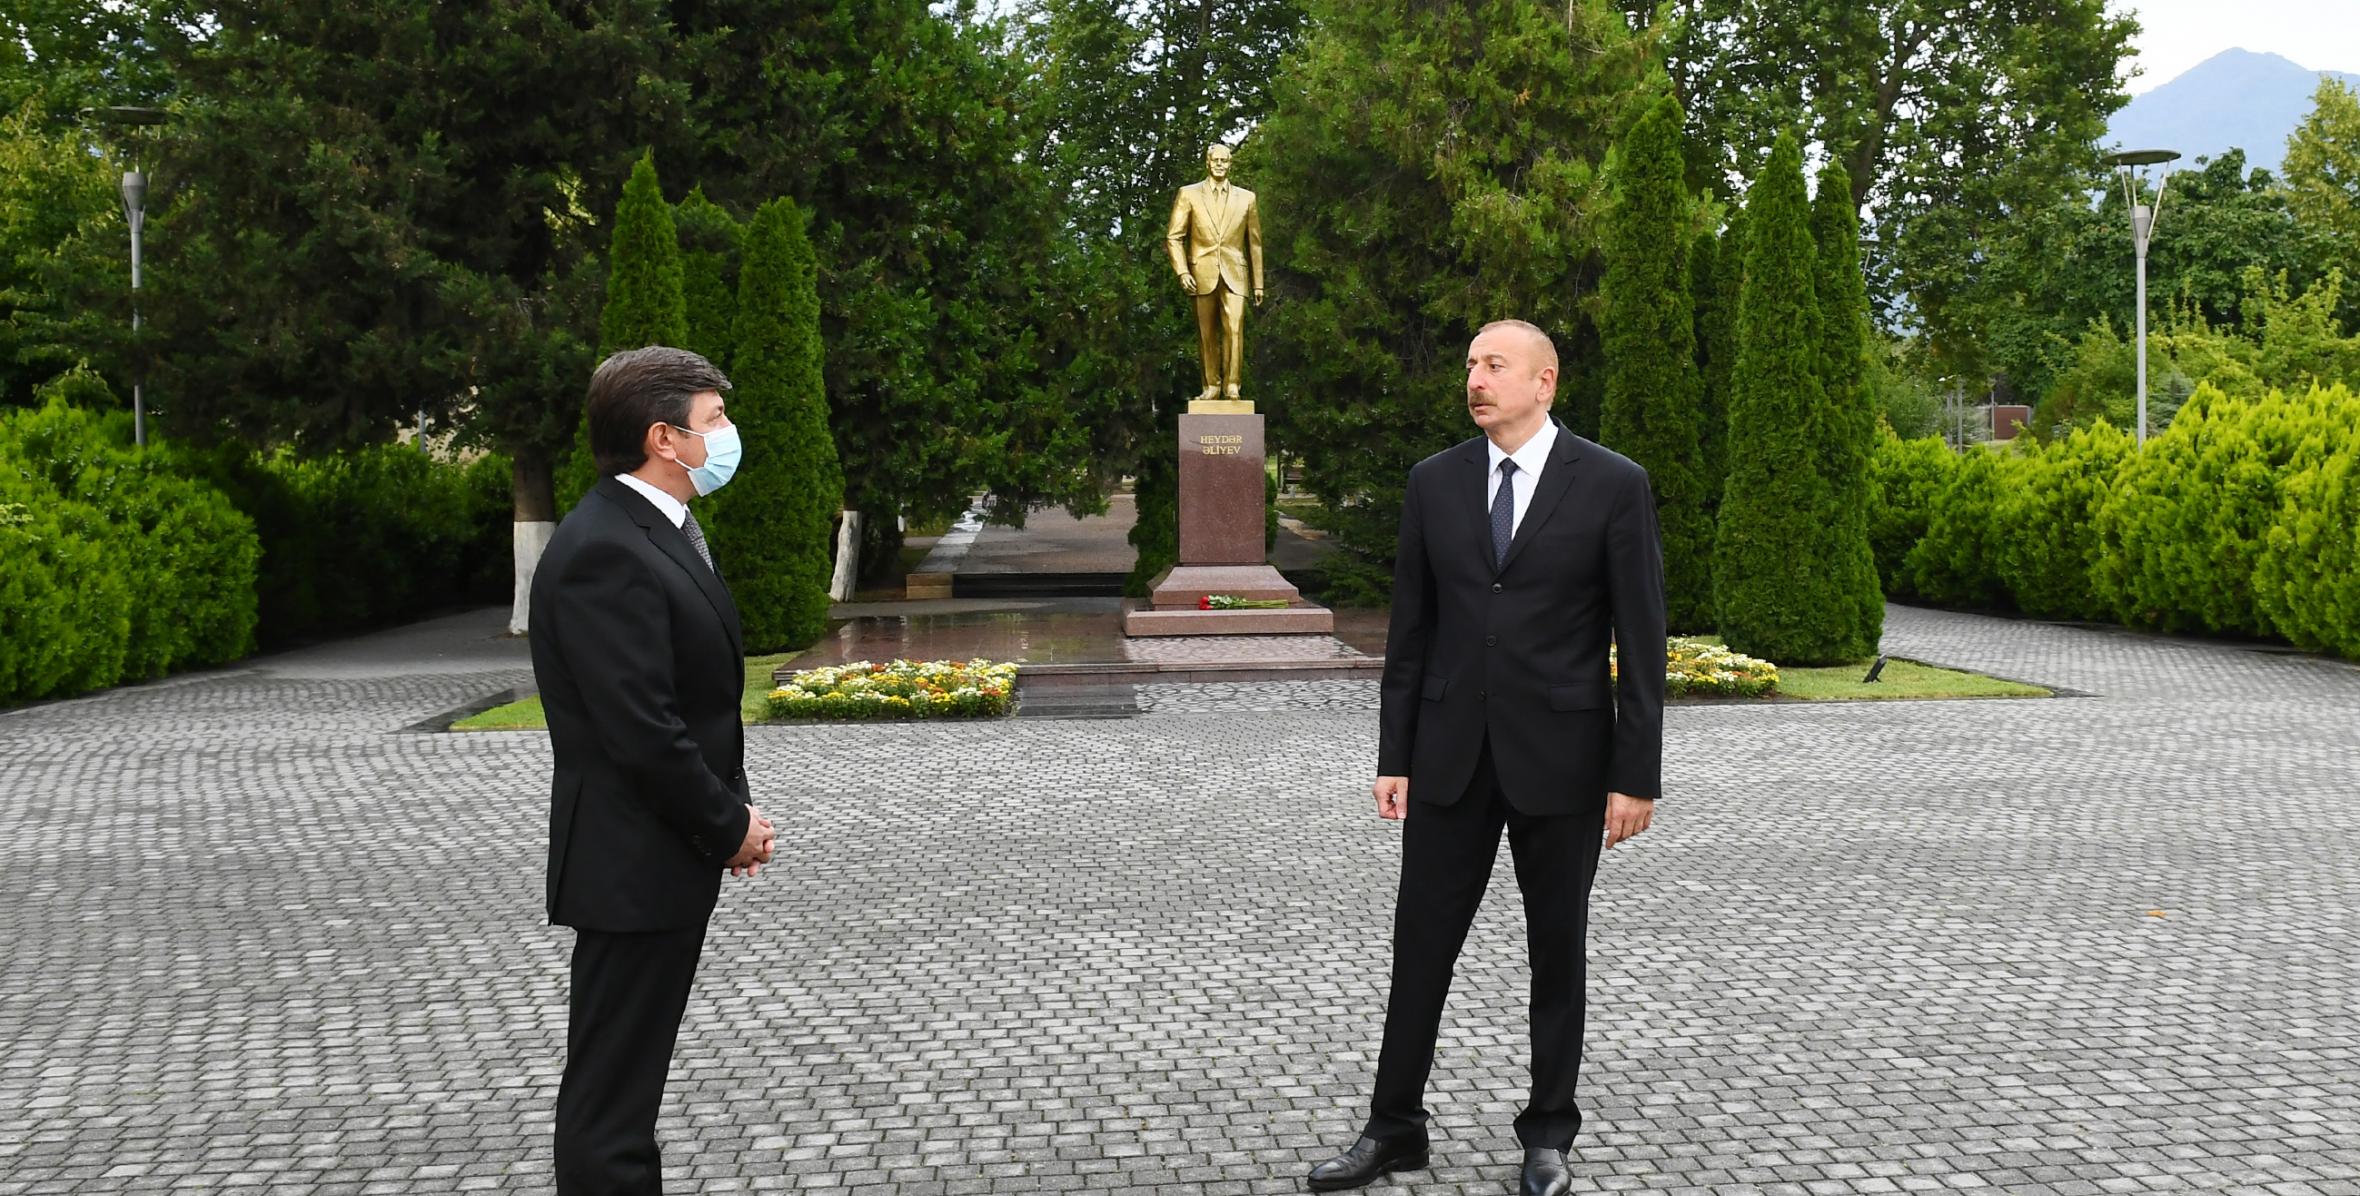 Ilham Aliyev arrived in Gabala district